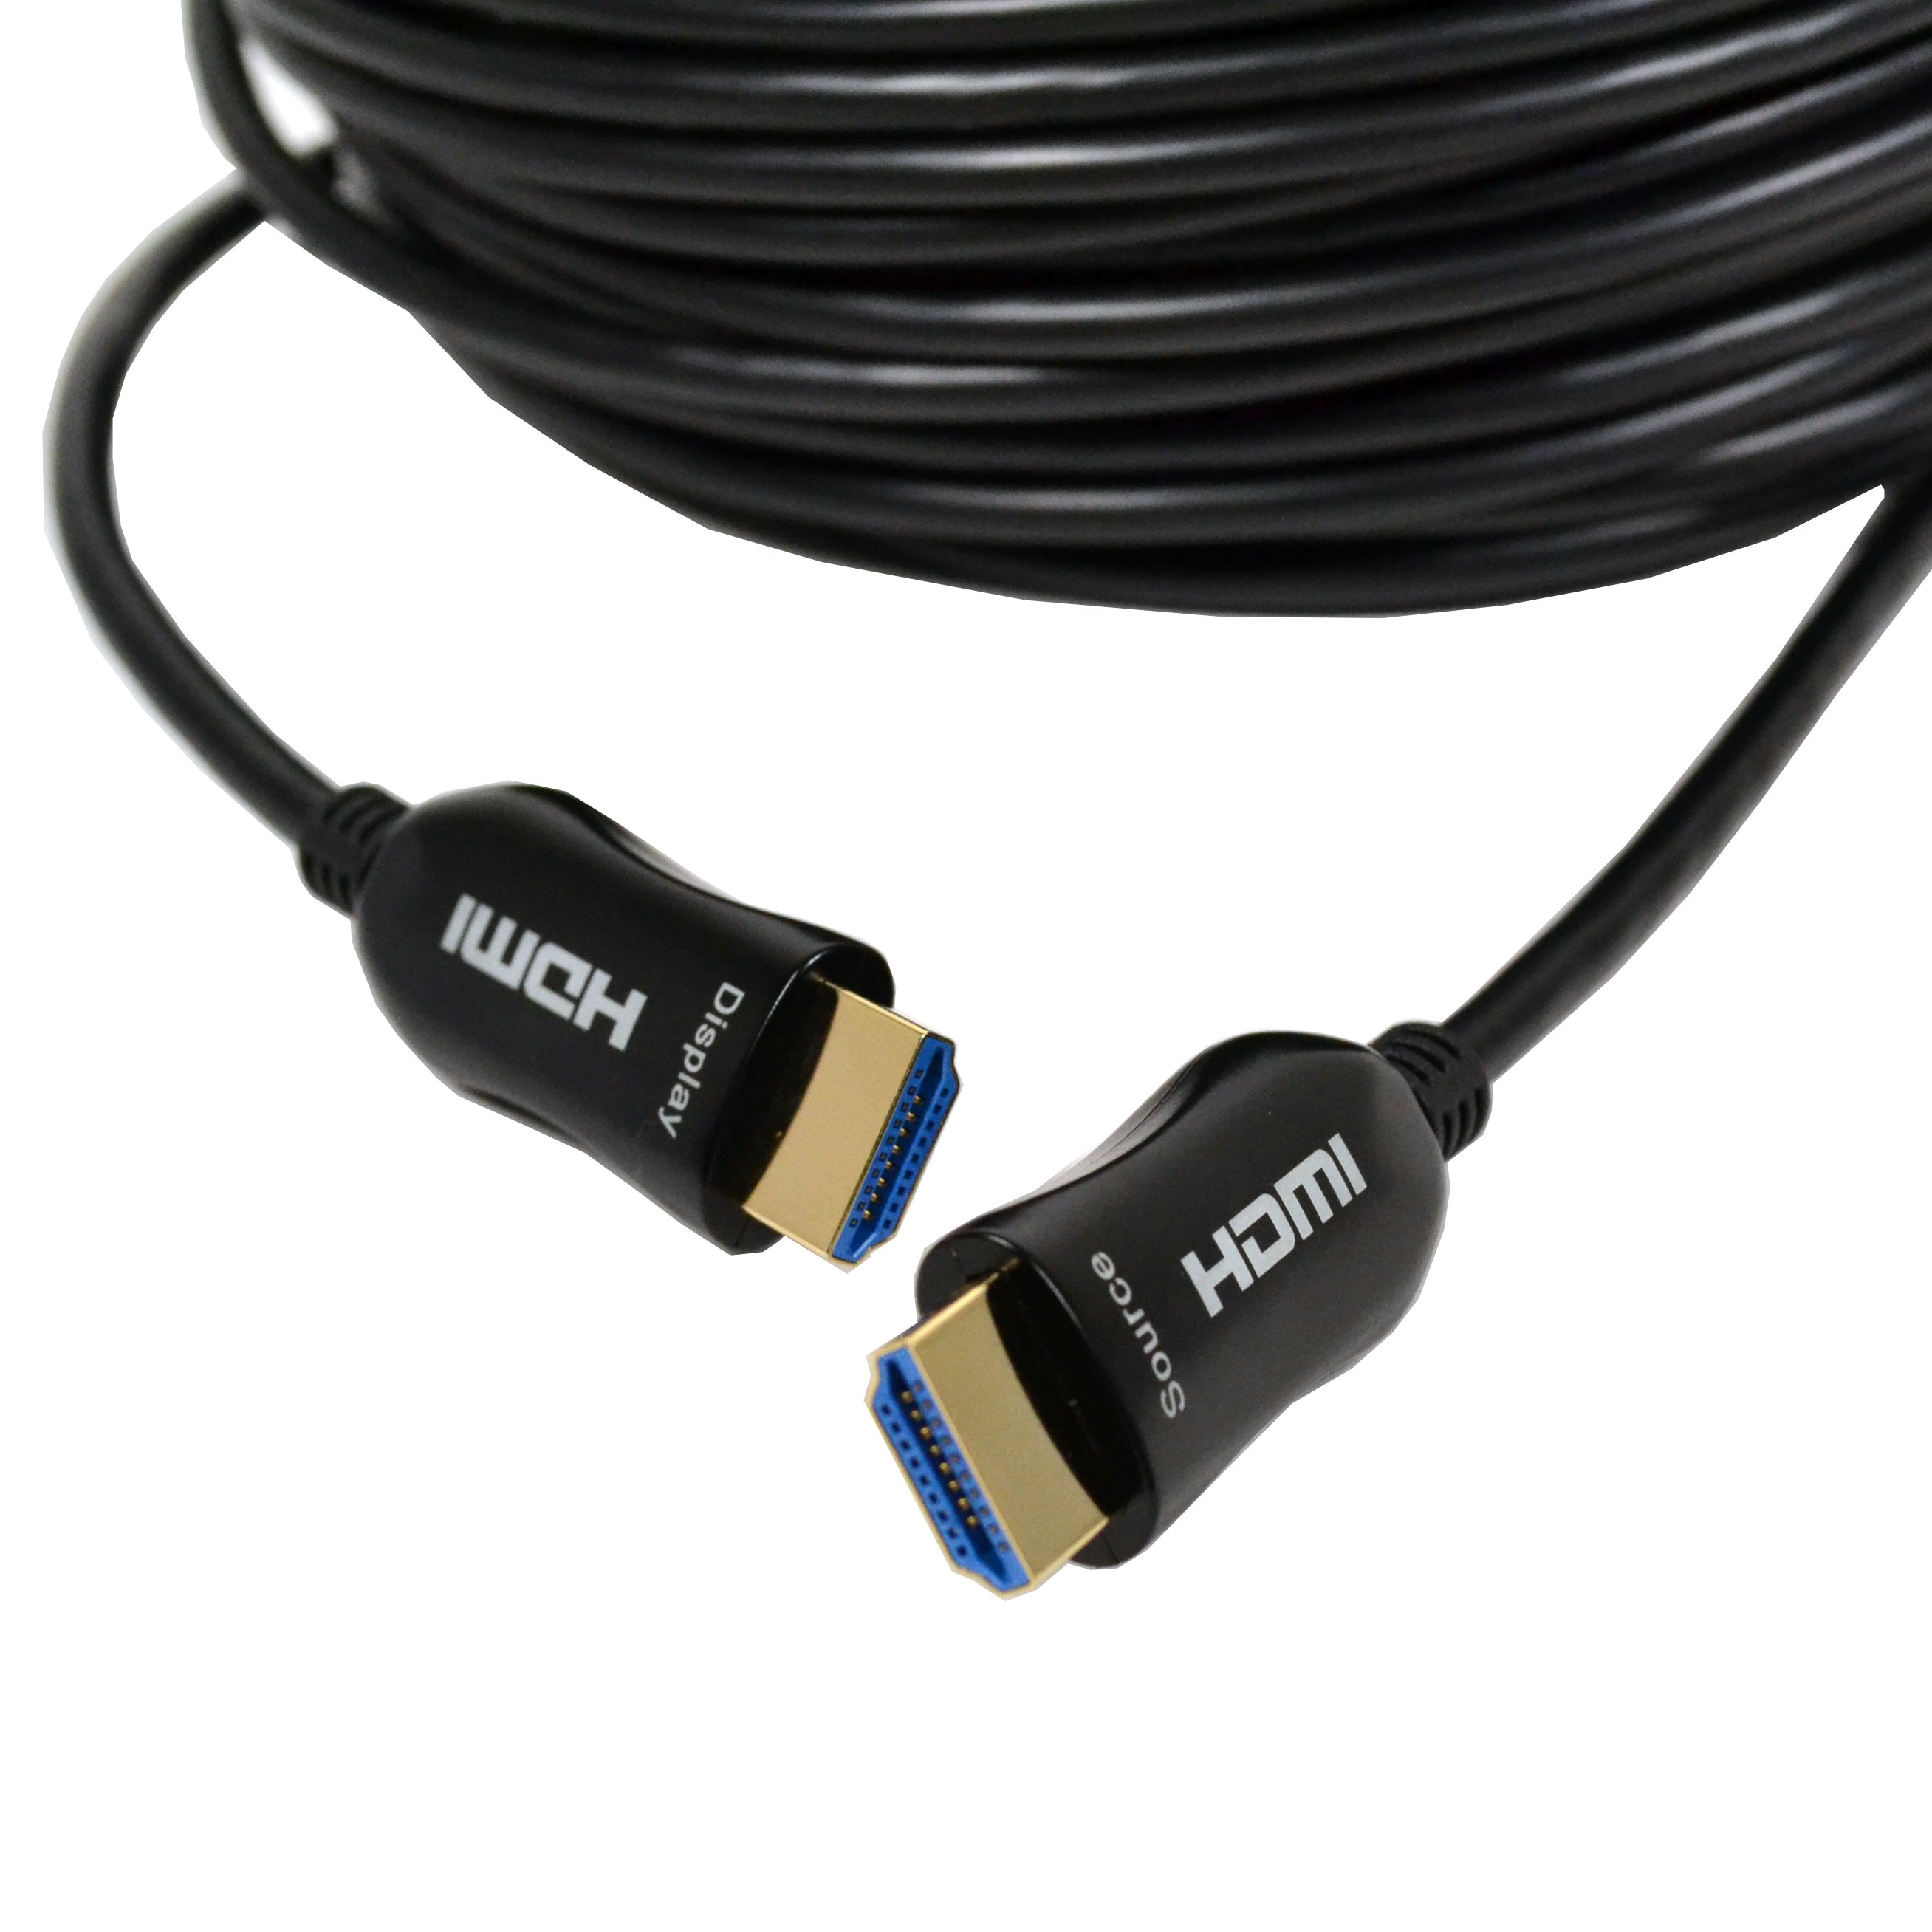 HDMI Over Fiber Cord 80 Ft